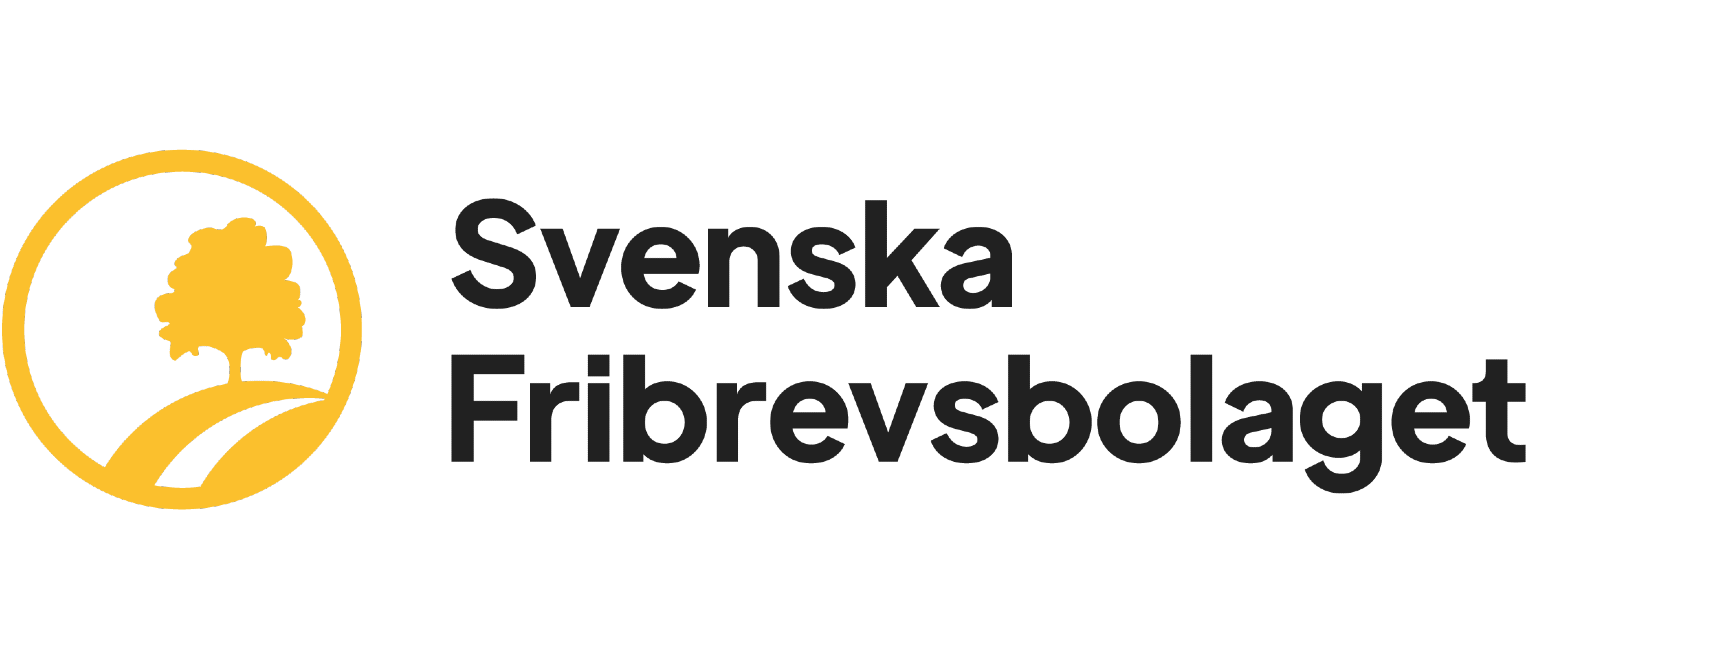 Svenska Fribrevsbolagets logo